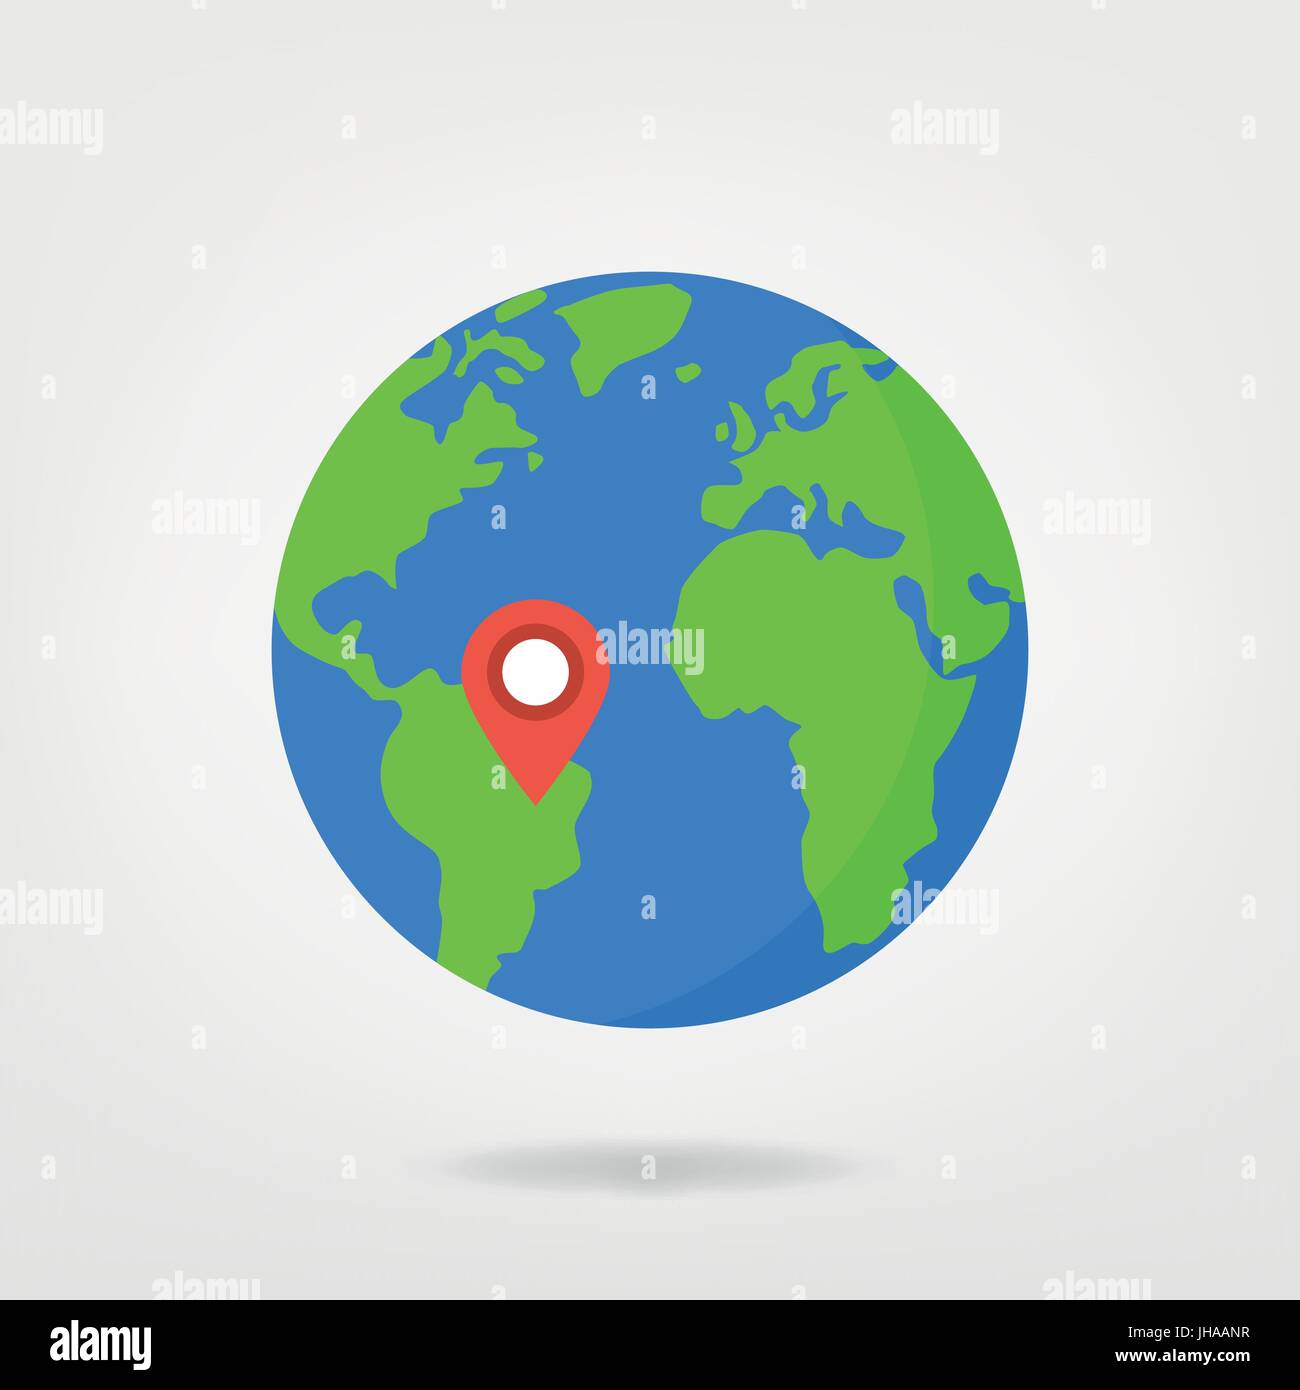 Standortmarkierung auf Welt Illustration - Südamerika Stockfoto